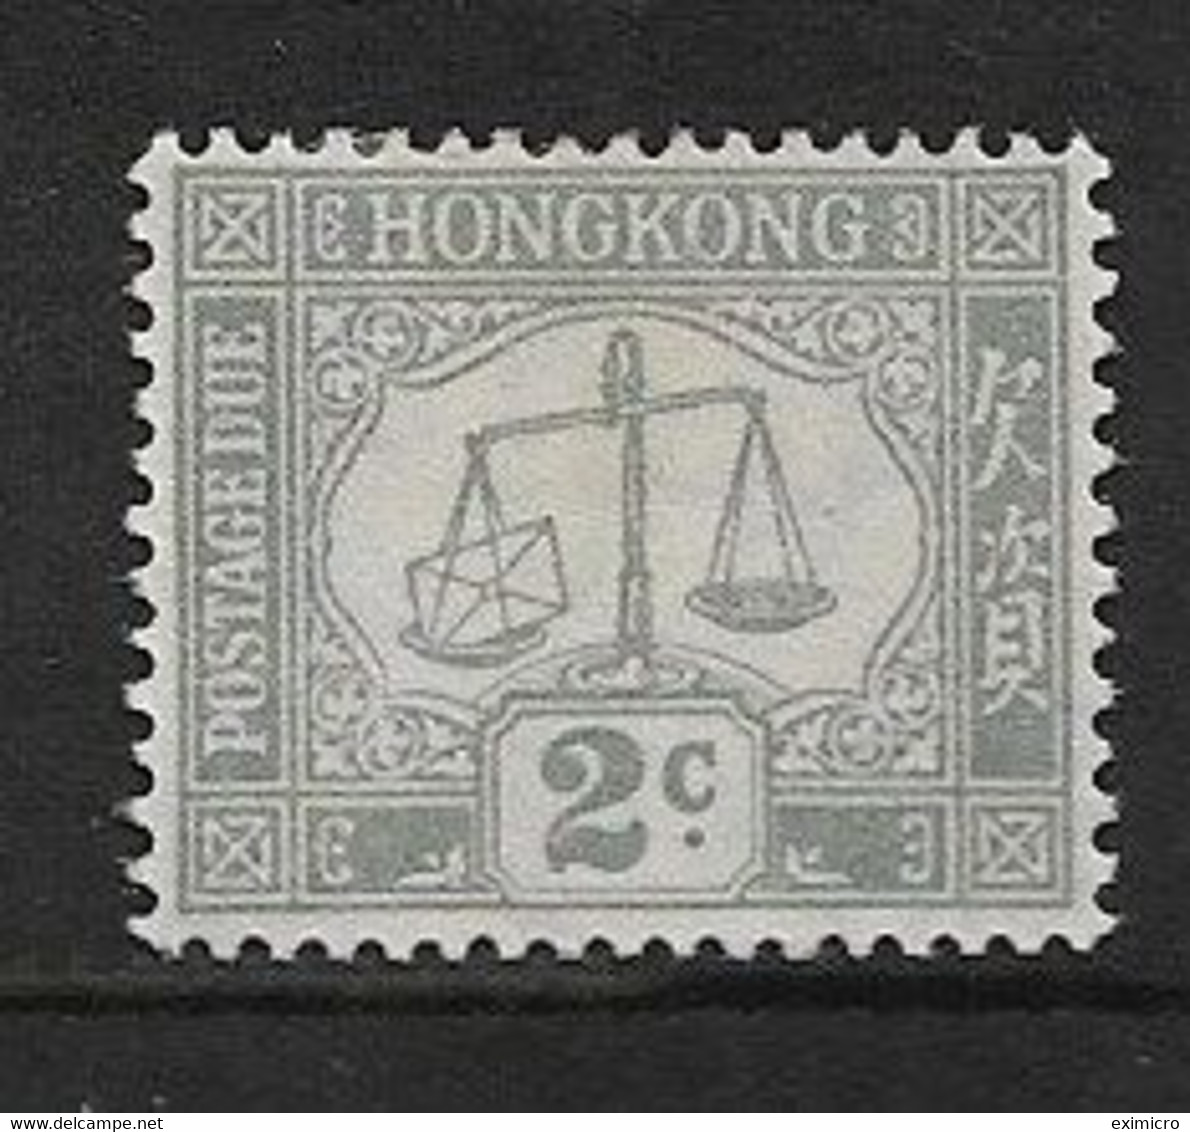 HONG KONG 1938 2c POSTAGE DUE SG D6 MOUNTED MINT Cat £7 - Portomarken